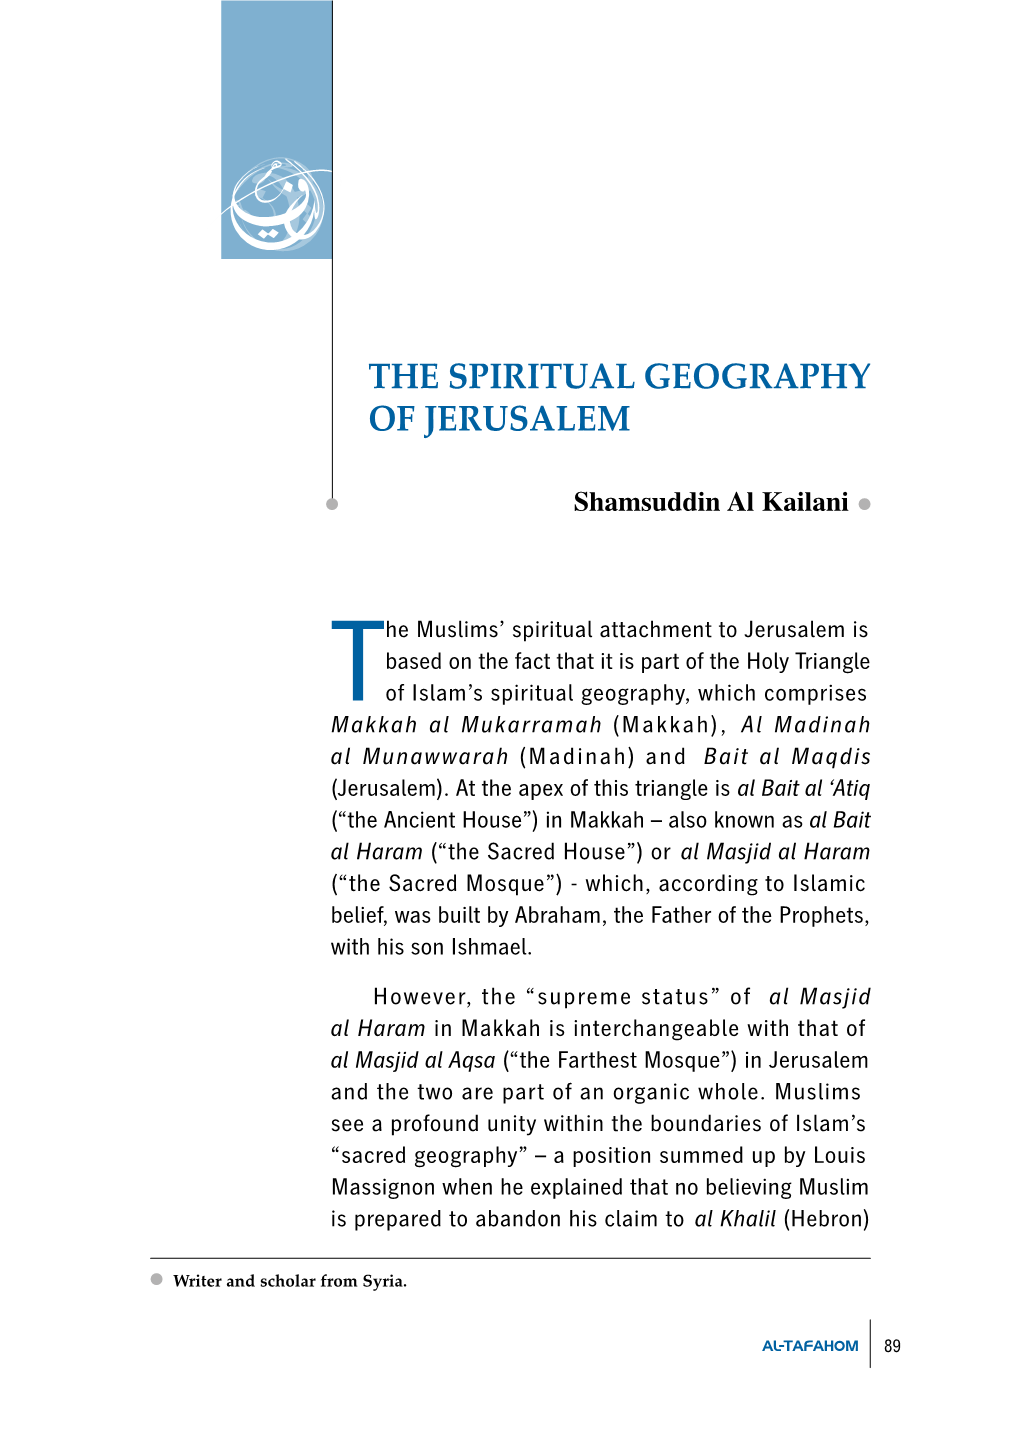 The Spiritual Geography of Jerusalem